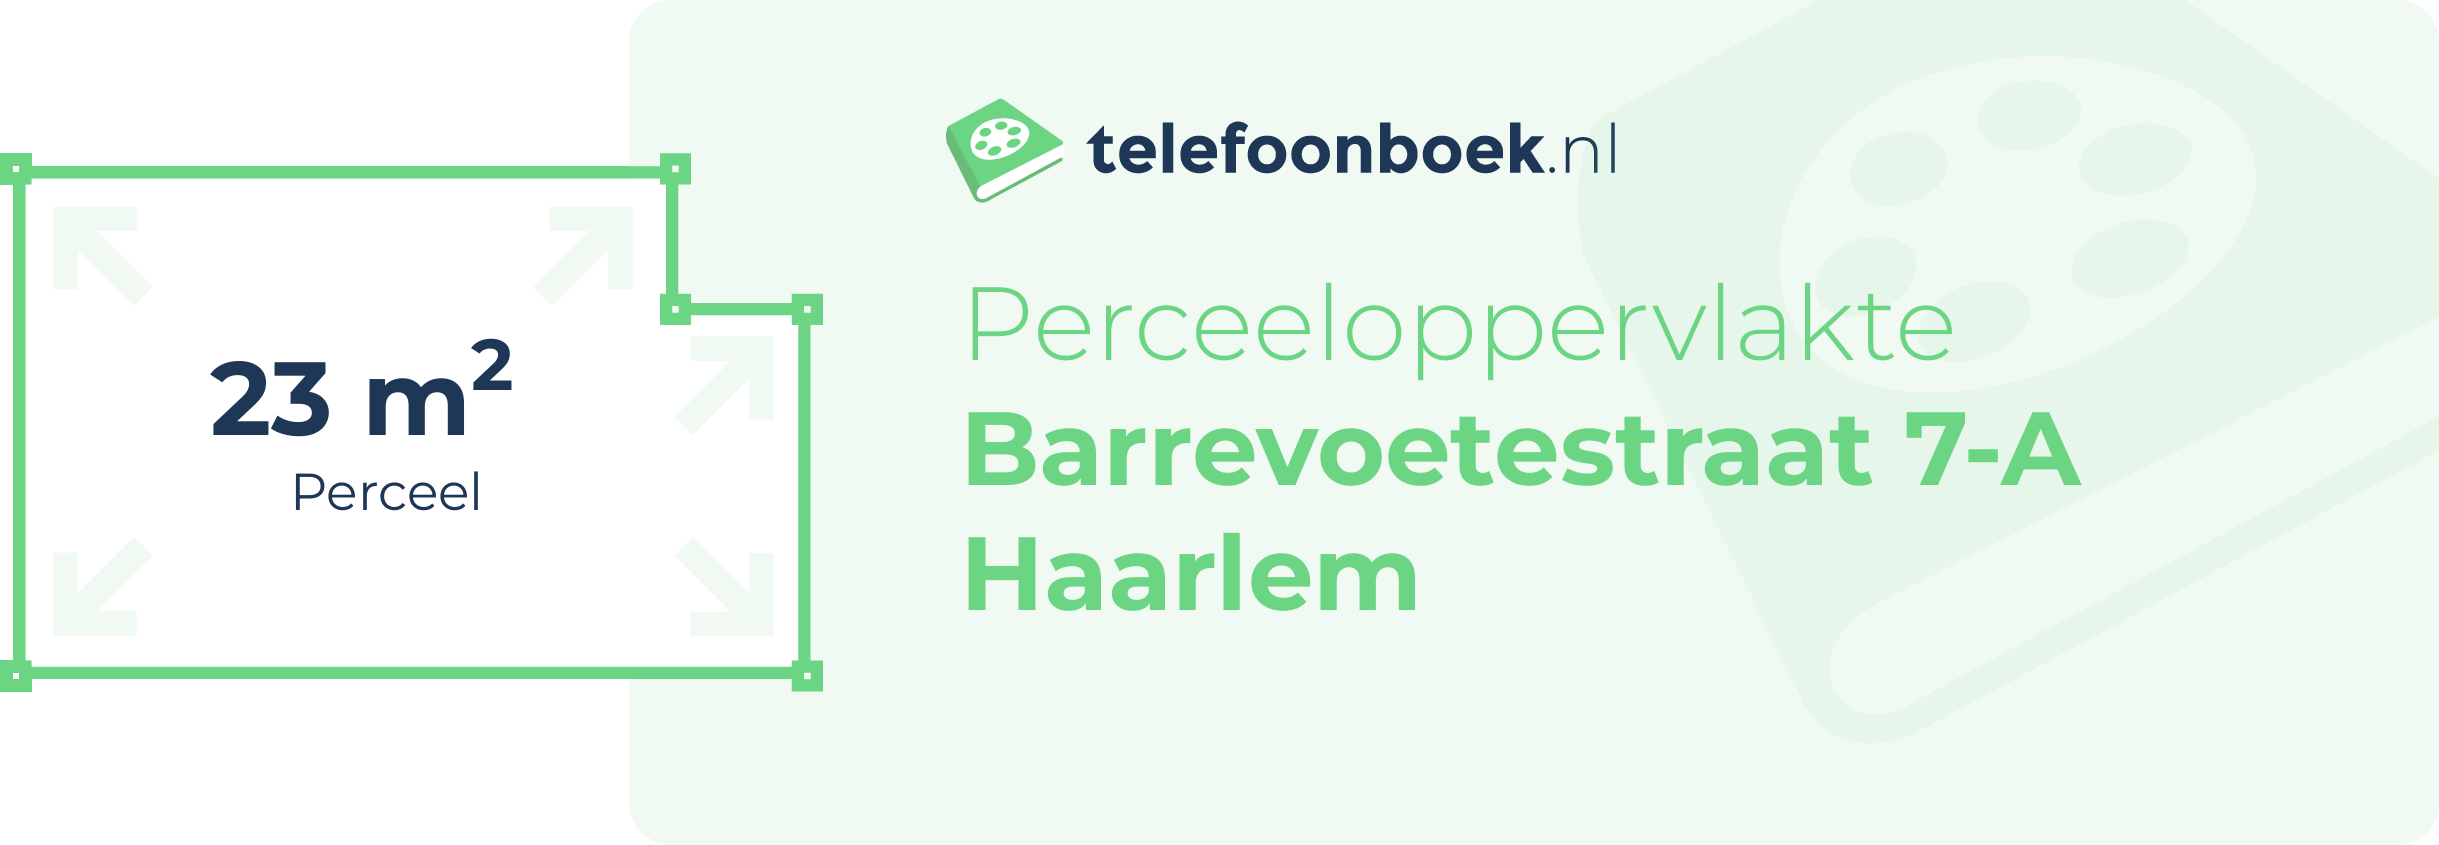 Perceeloppervlakte Barrevoetestraat 7-A Haarlem